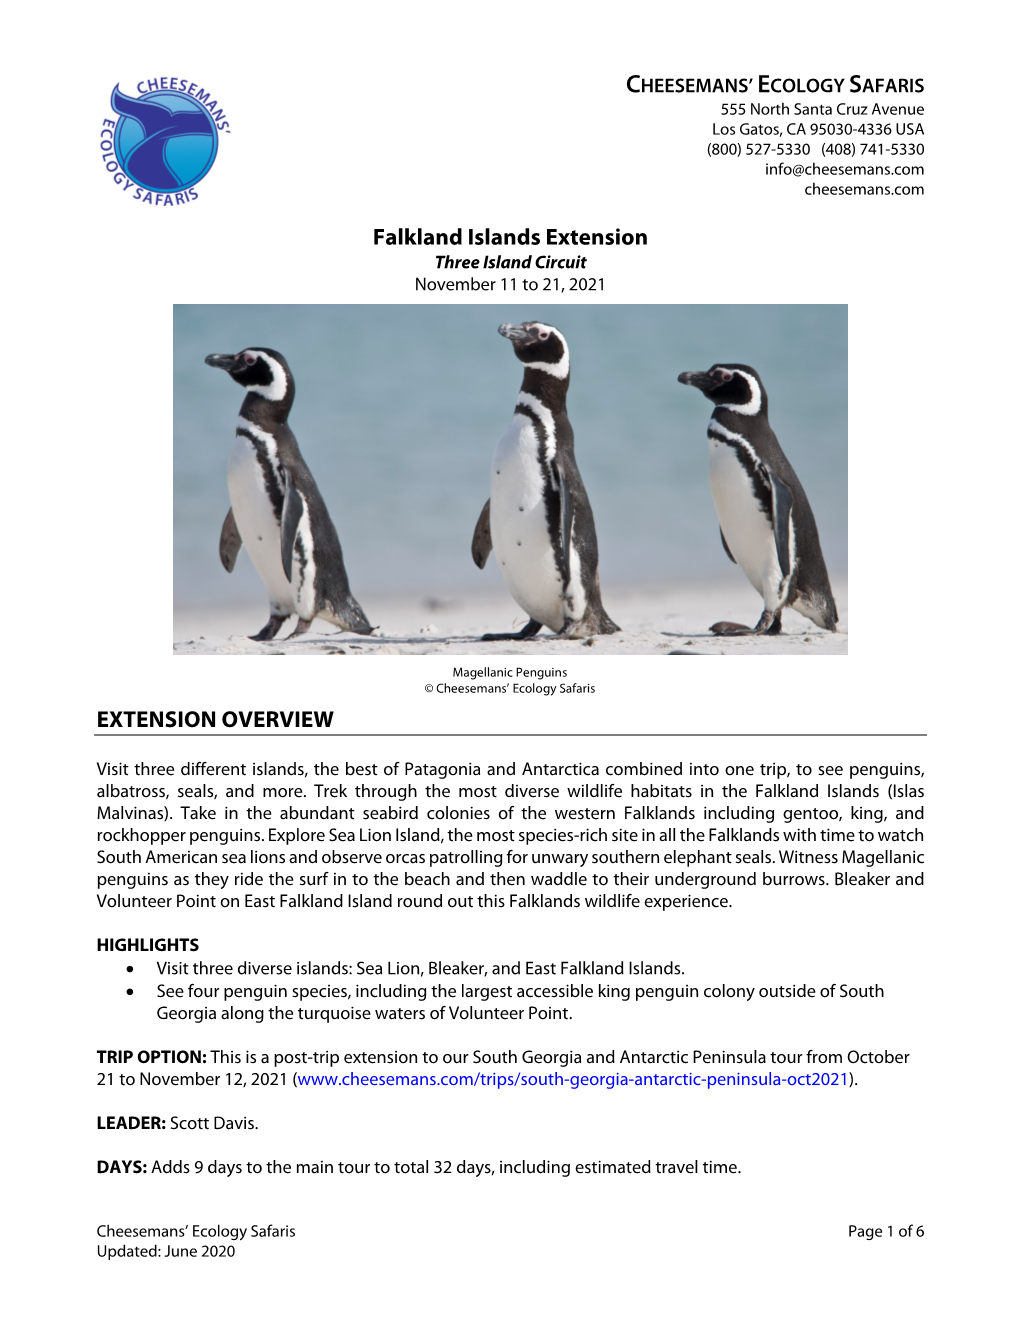 SG and Antarctica Falklands Ext Nov2021 Updatedjun2020